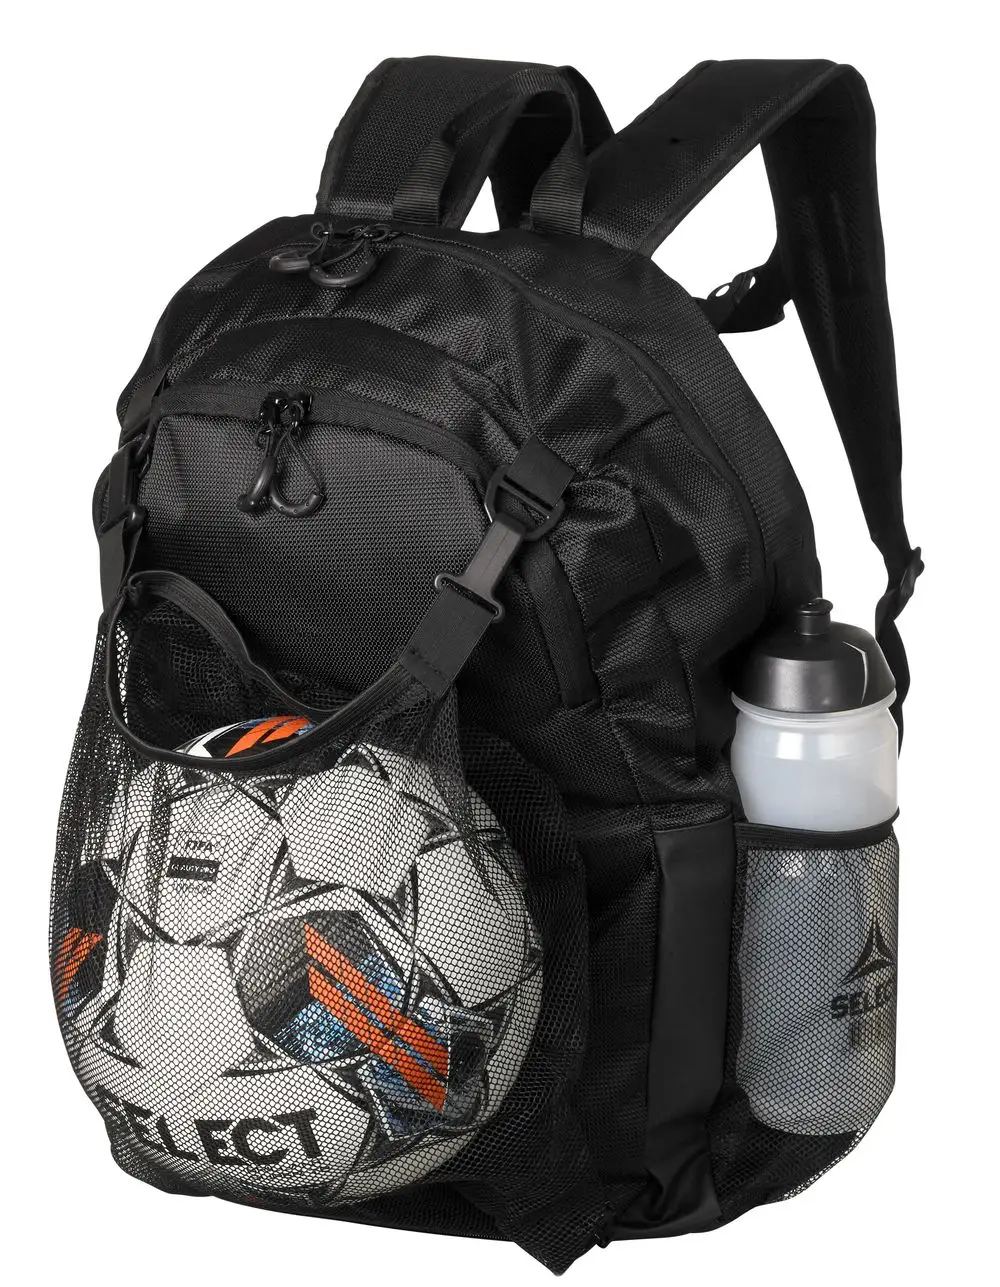 Ранець SELECT Milano backpack with net for ball (010) чорний, 25L